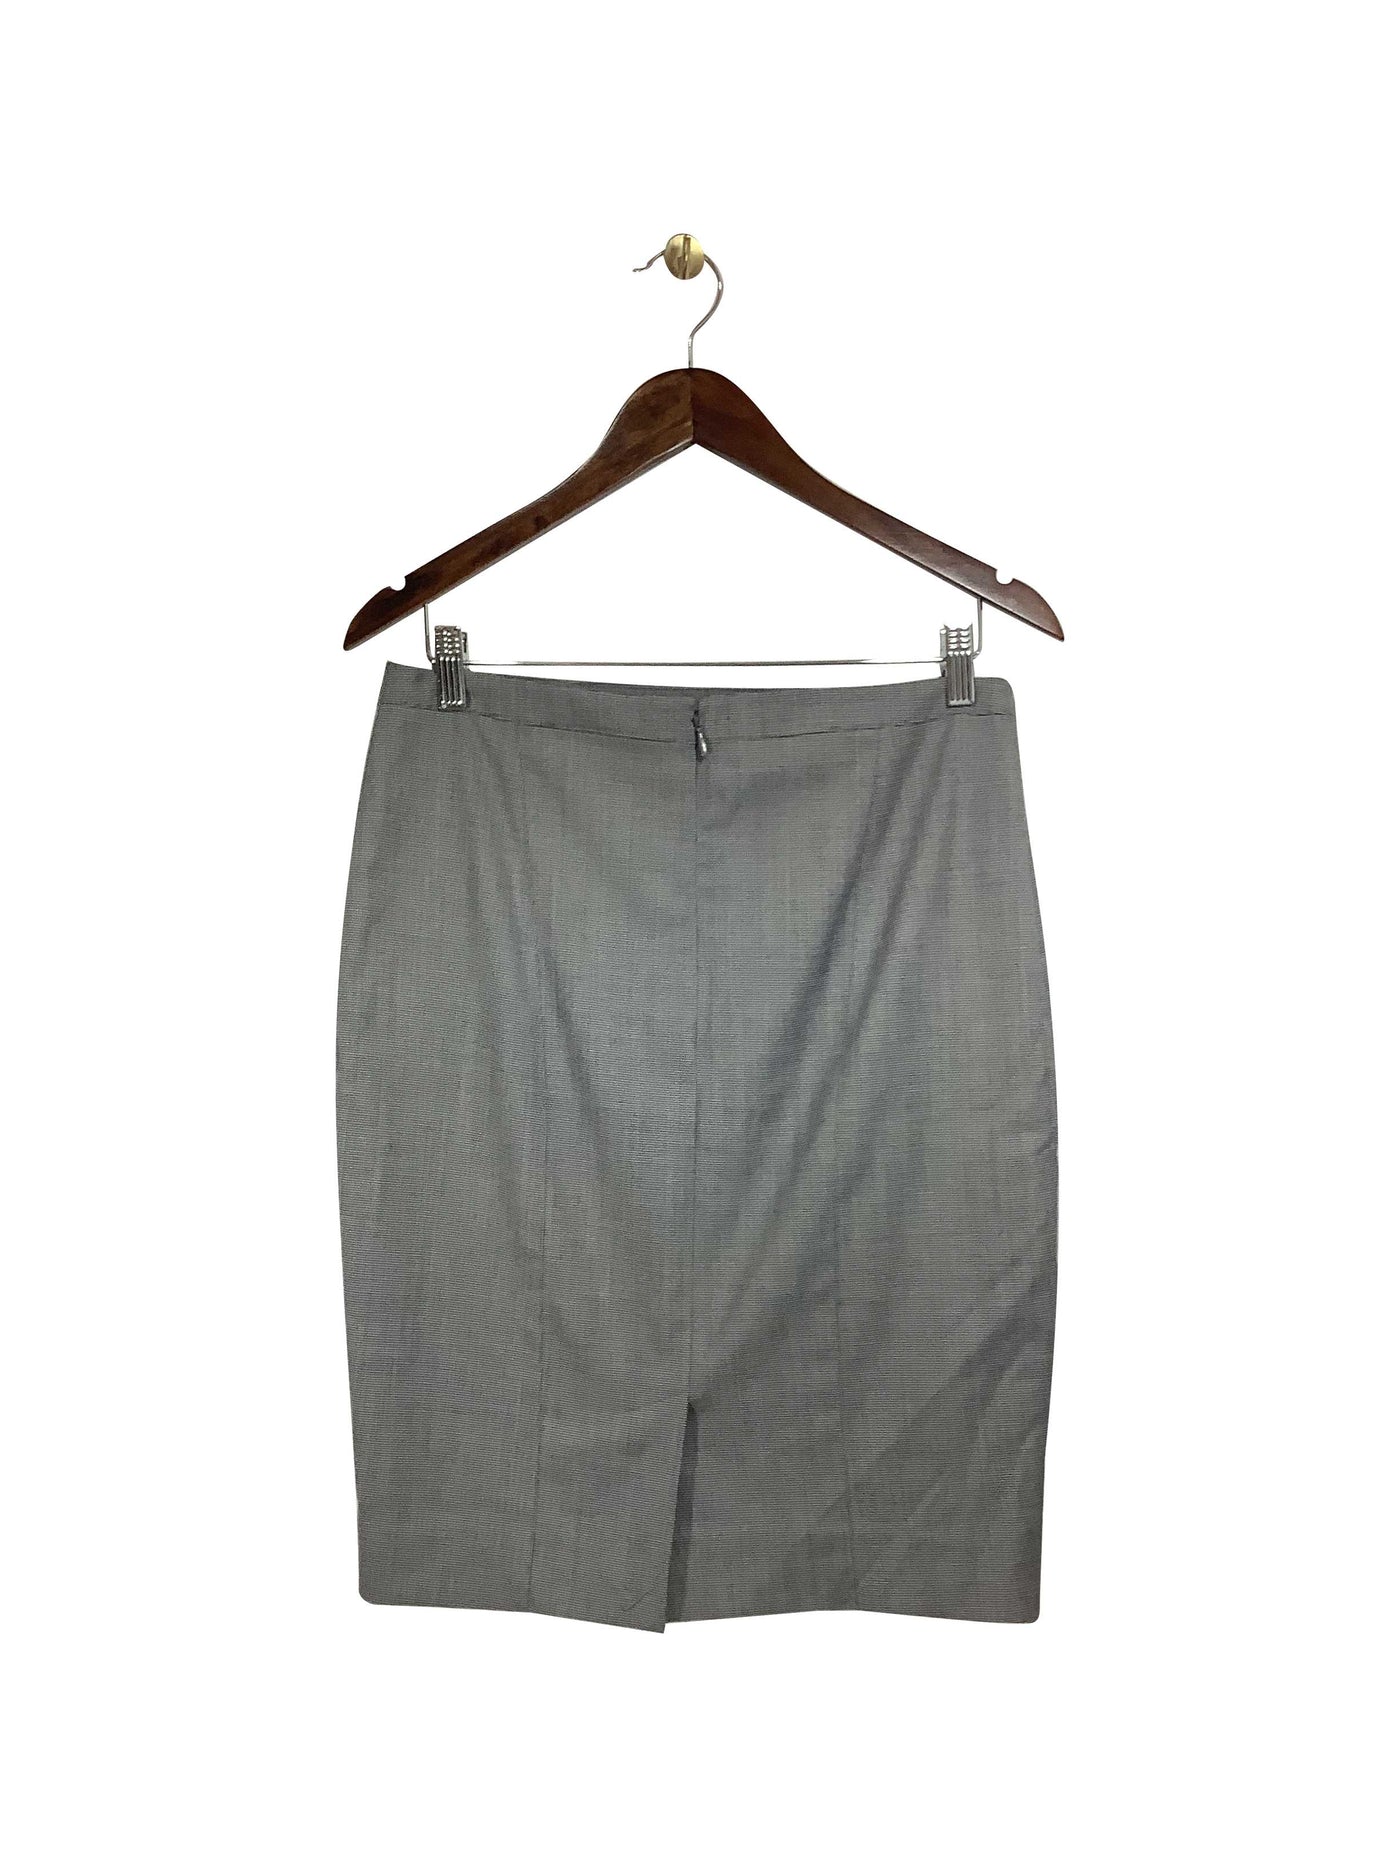 CHATEAU Regular fit Skirt in Gray - Size 8 | 14.49 $ KOOP